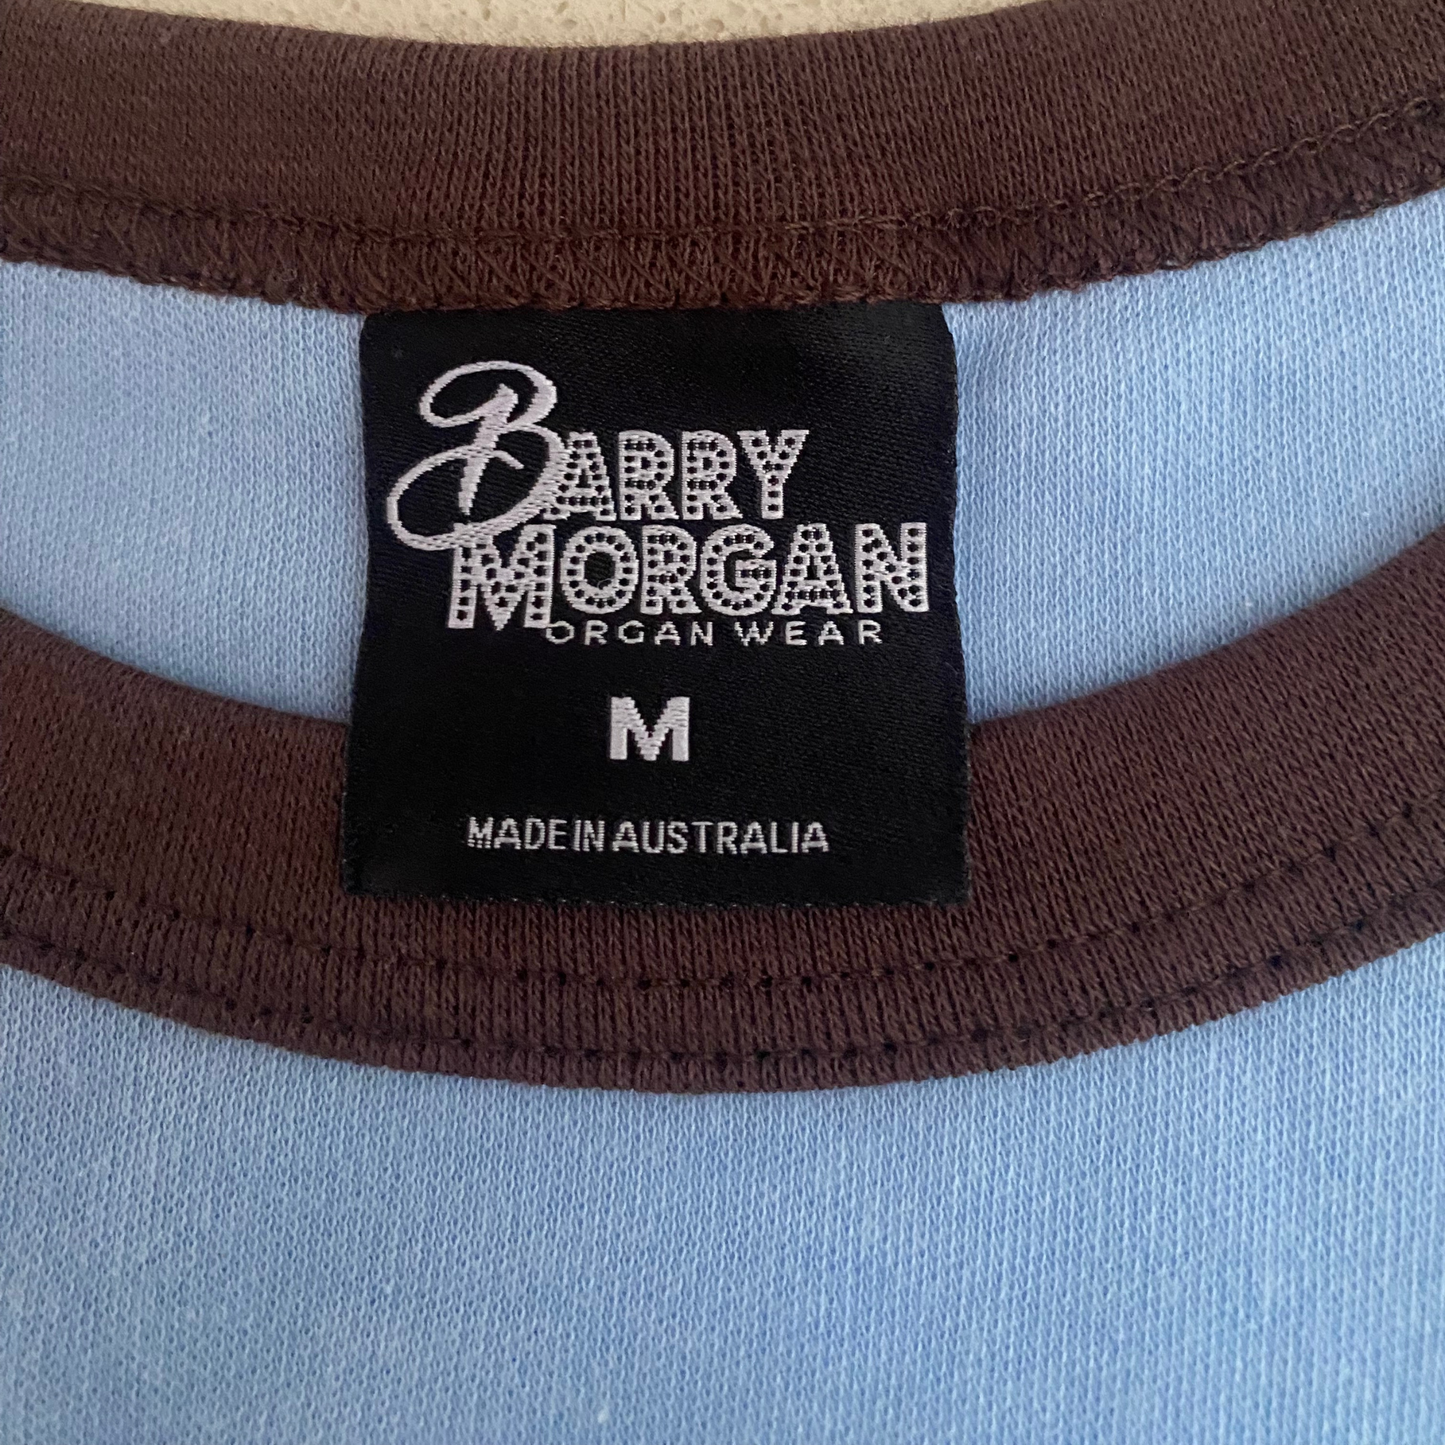 Barry Morgan Organ Wear